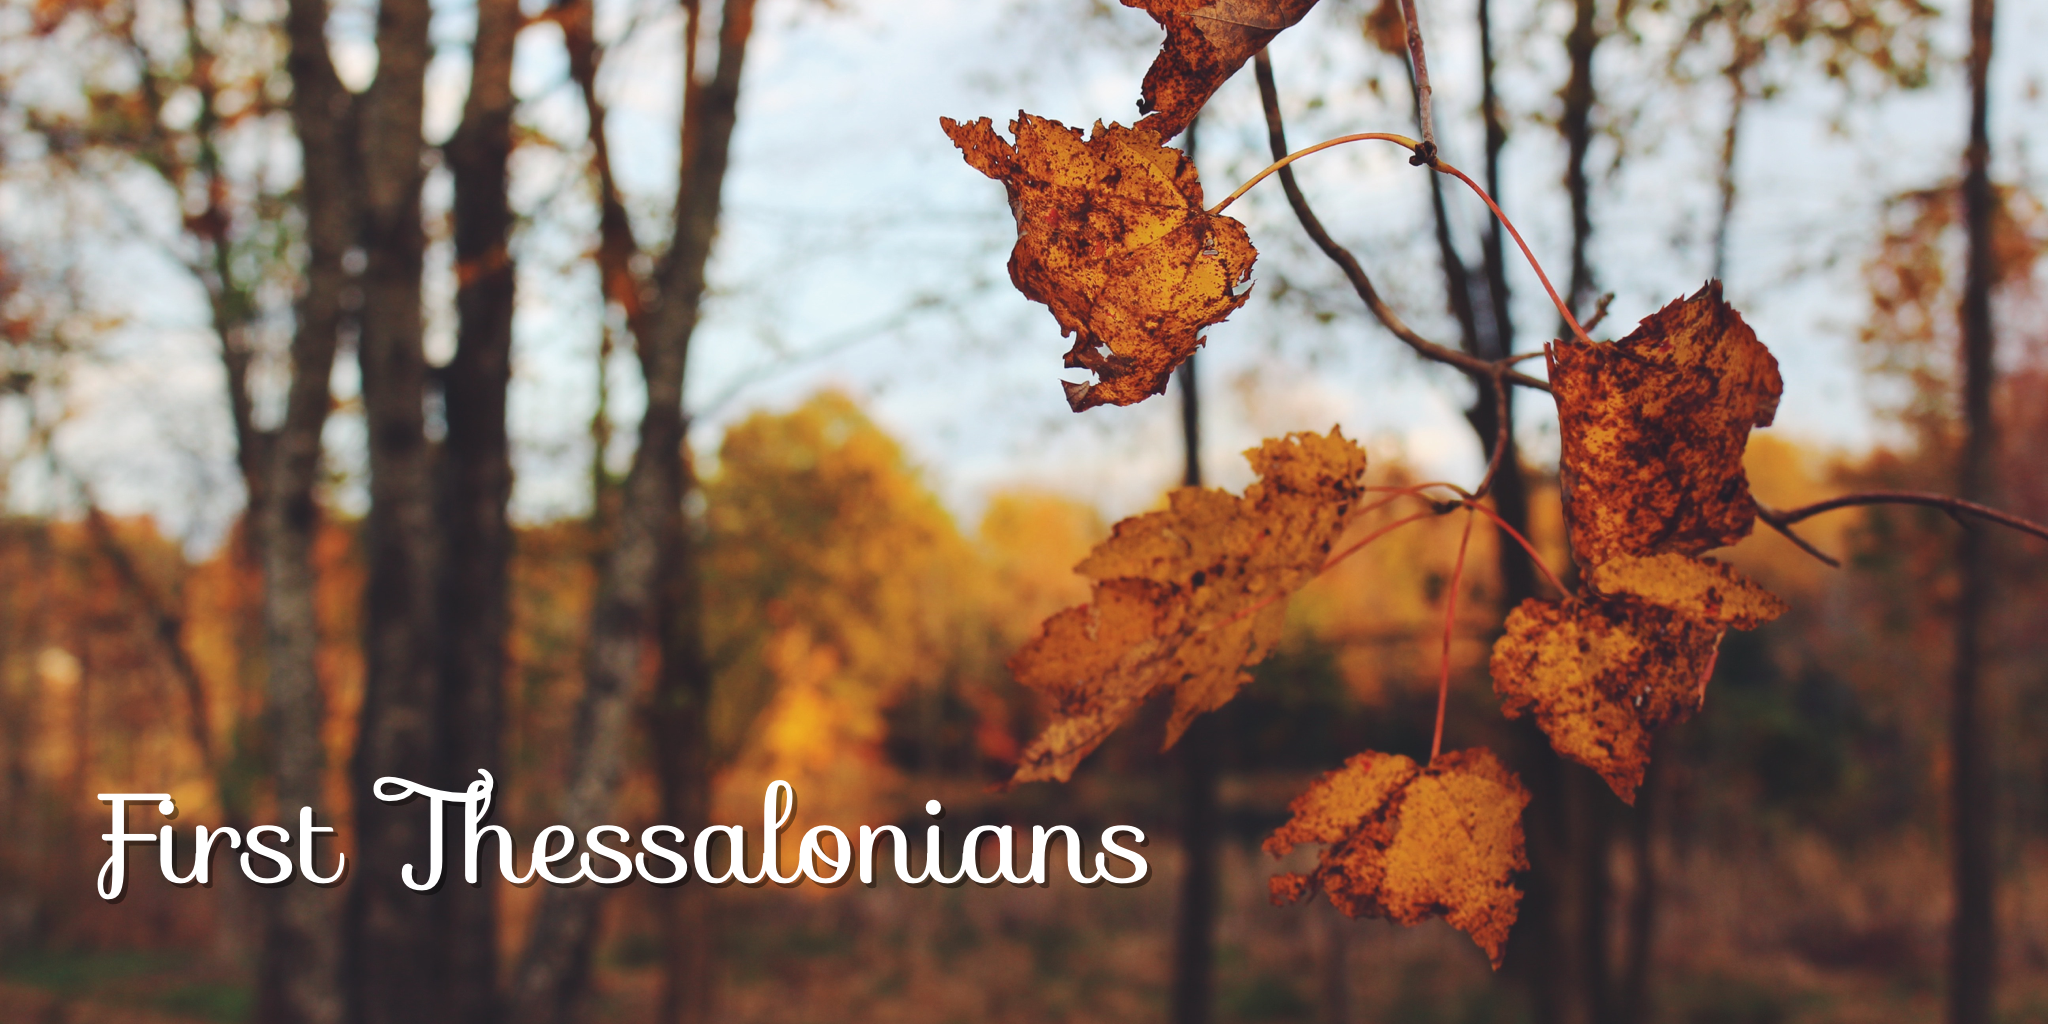 First Thessalonians